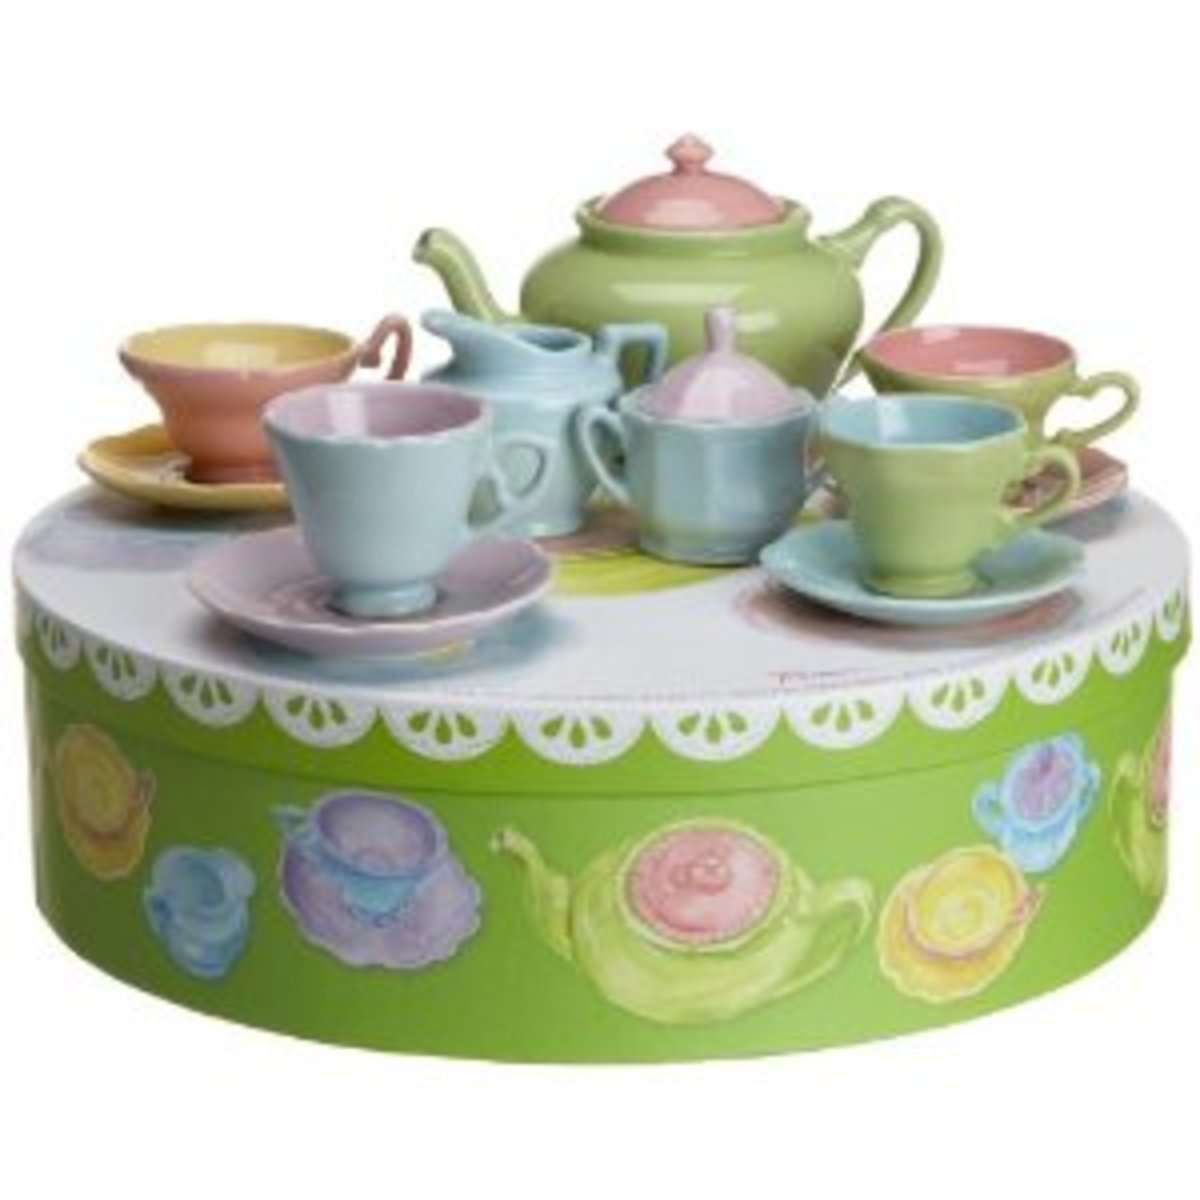 Rosanna Tea For Me Too, Gift-boxed Children's Tea Set, Service for 4